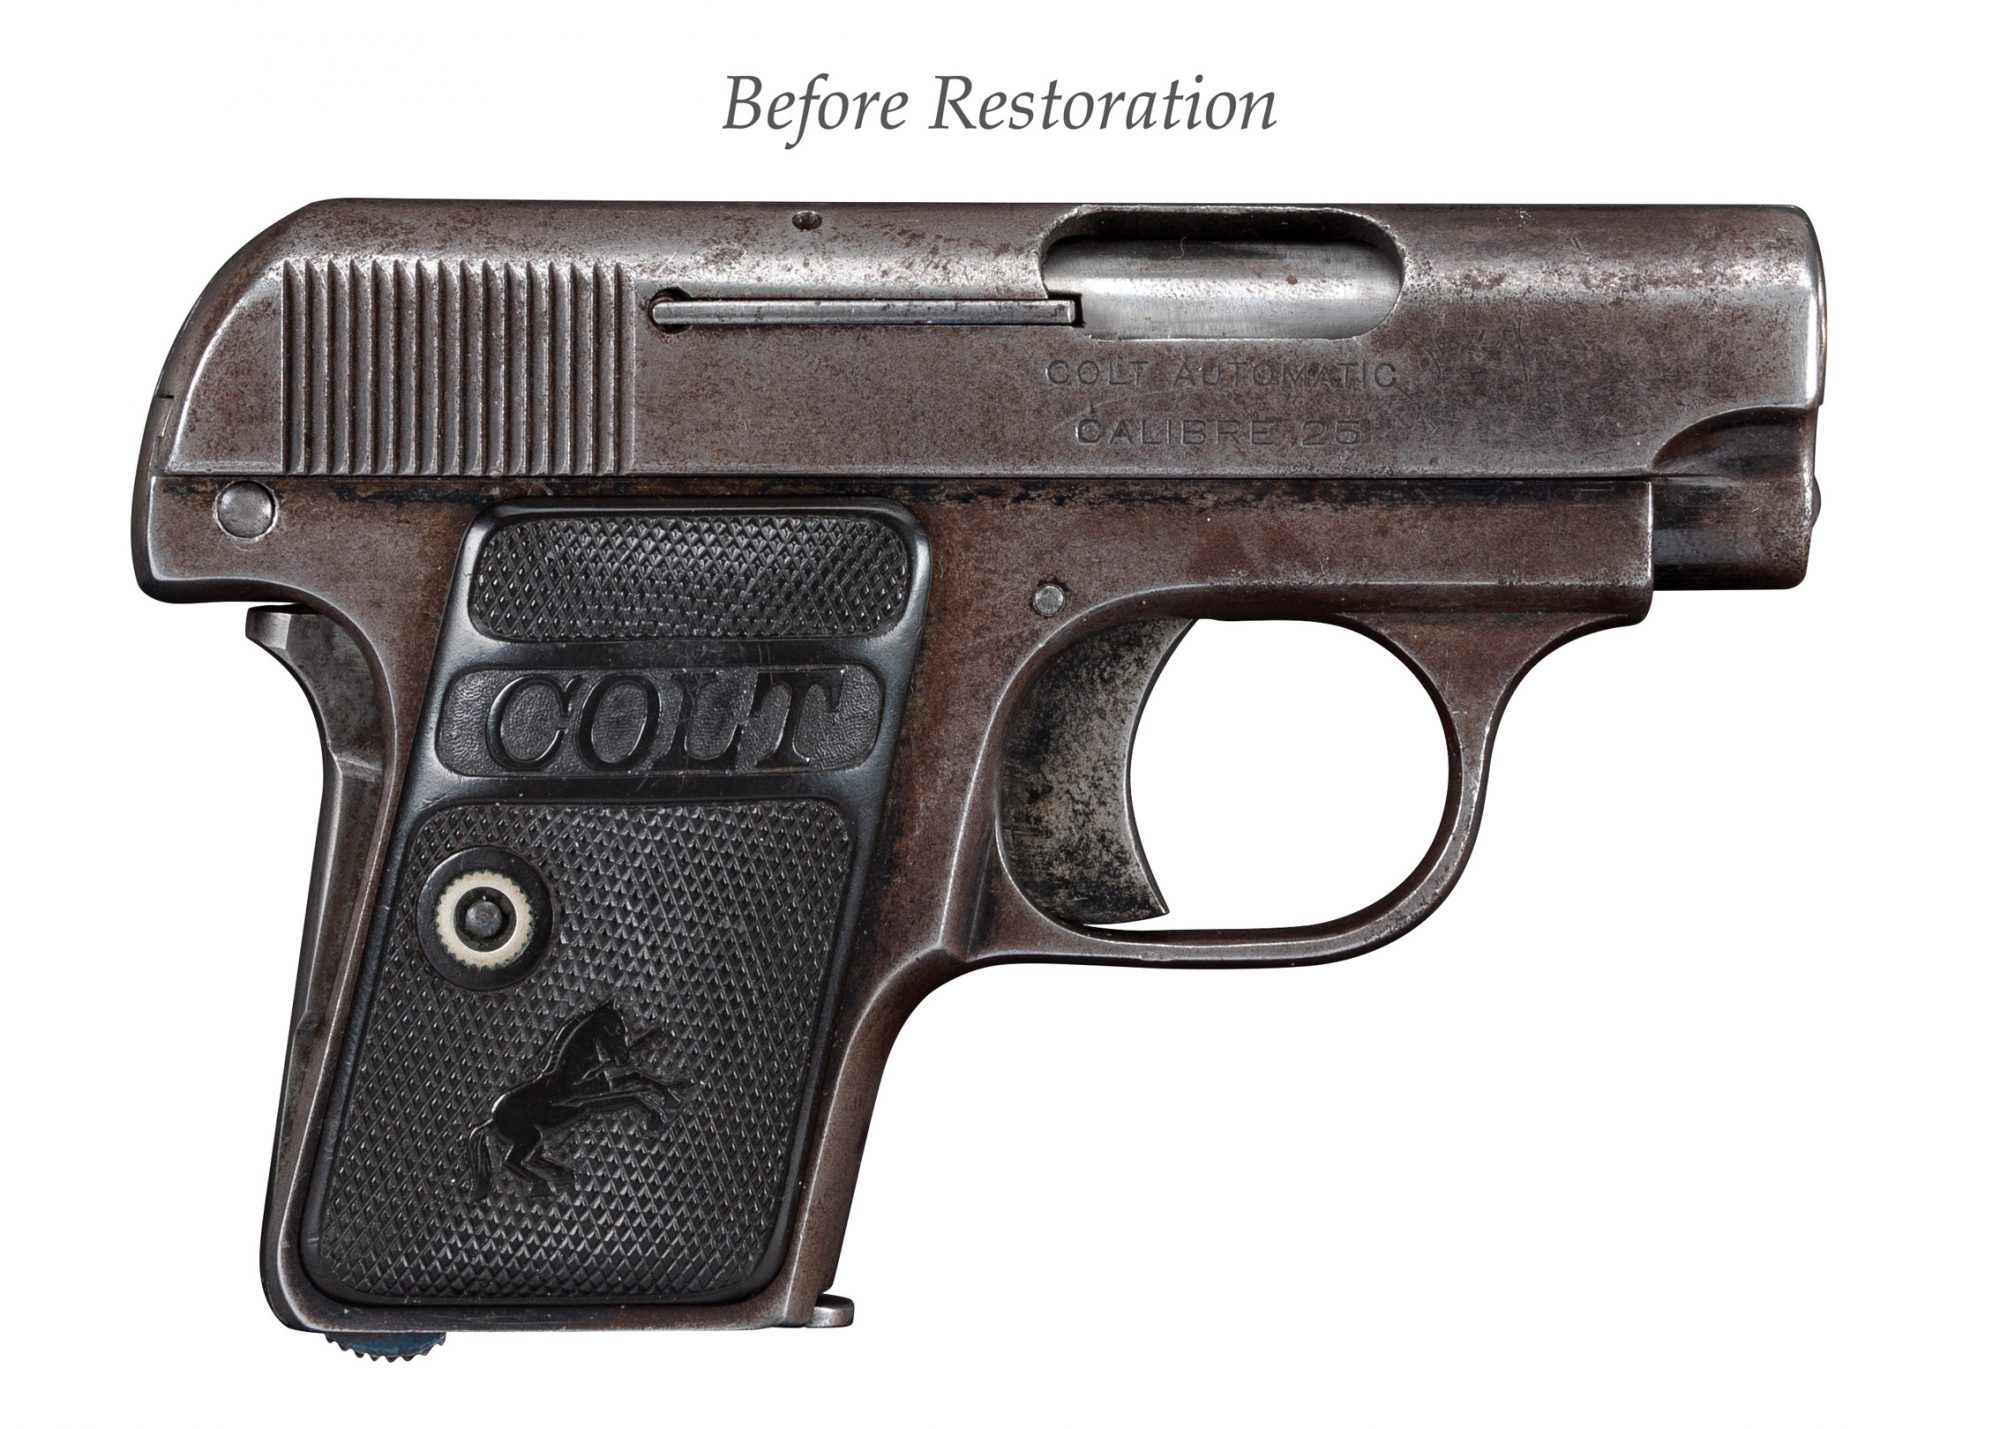 Photo of a Colt 1908 Vest Pocket, before restoration by Turnbull Restoration